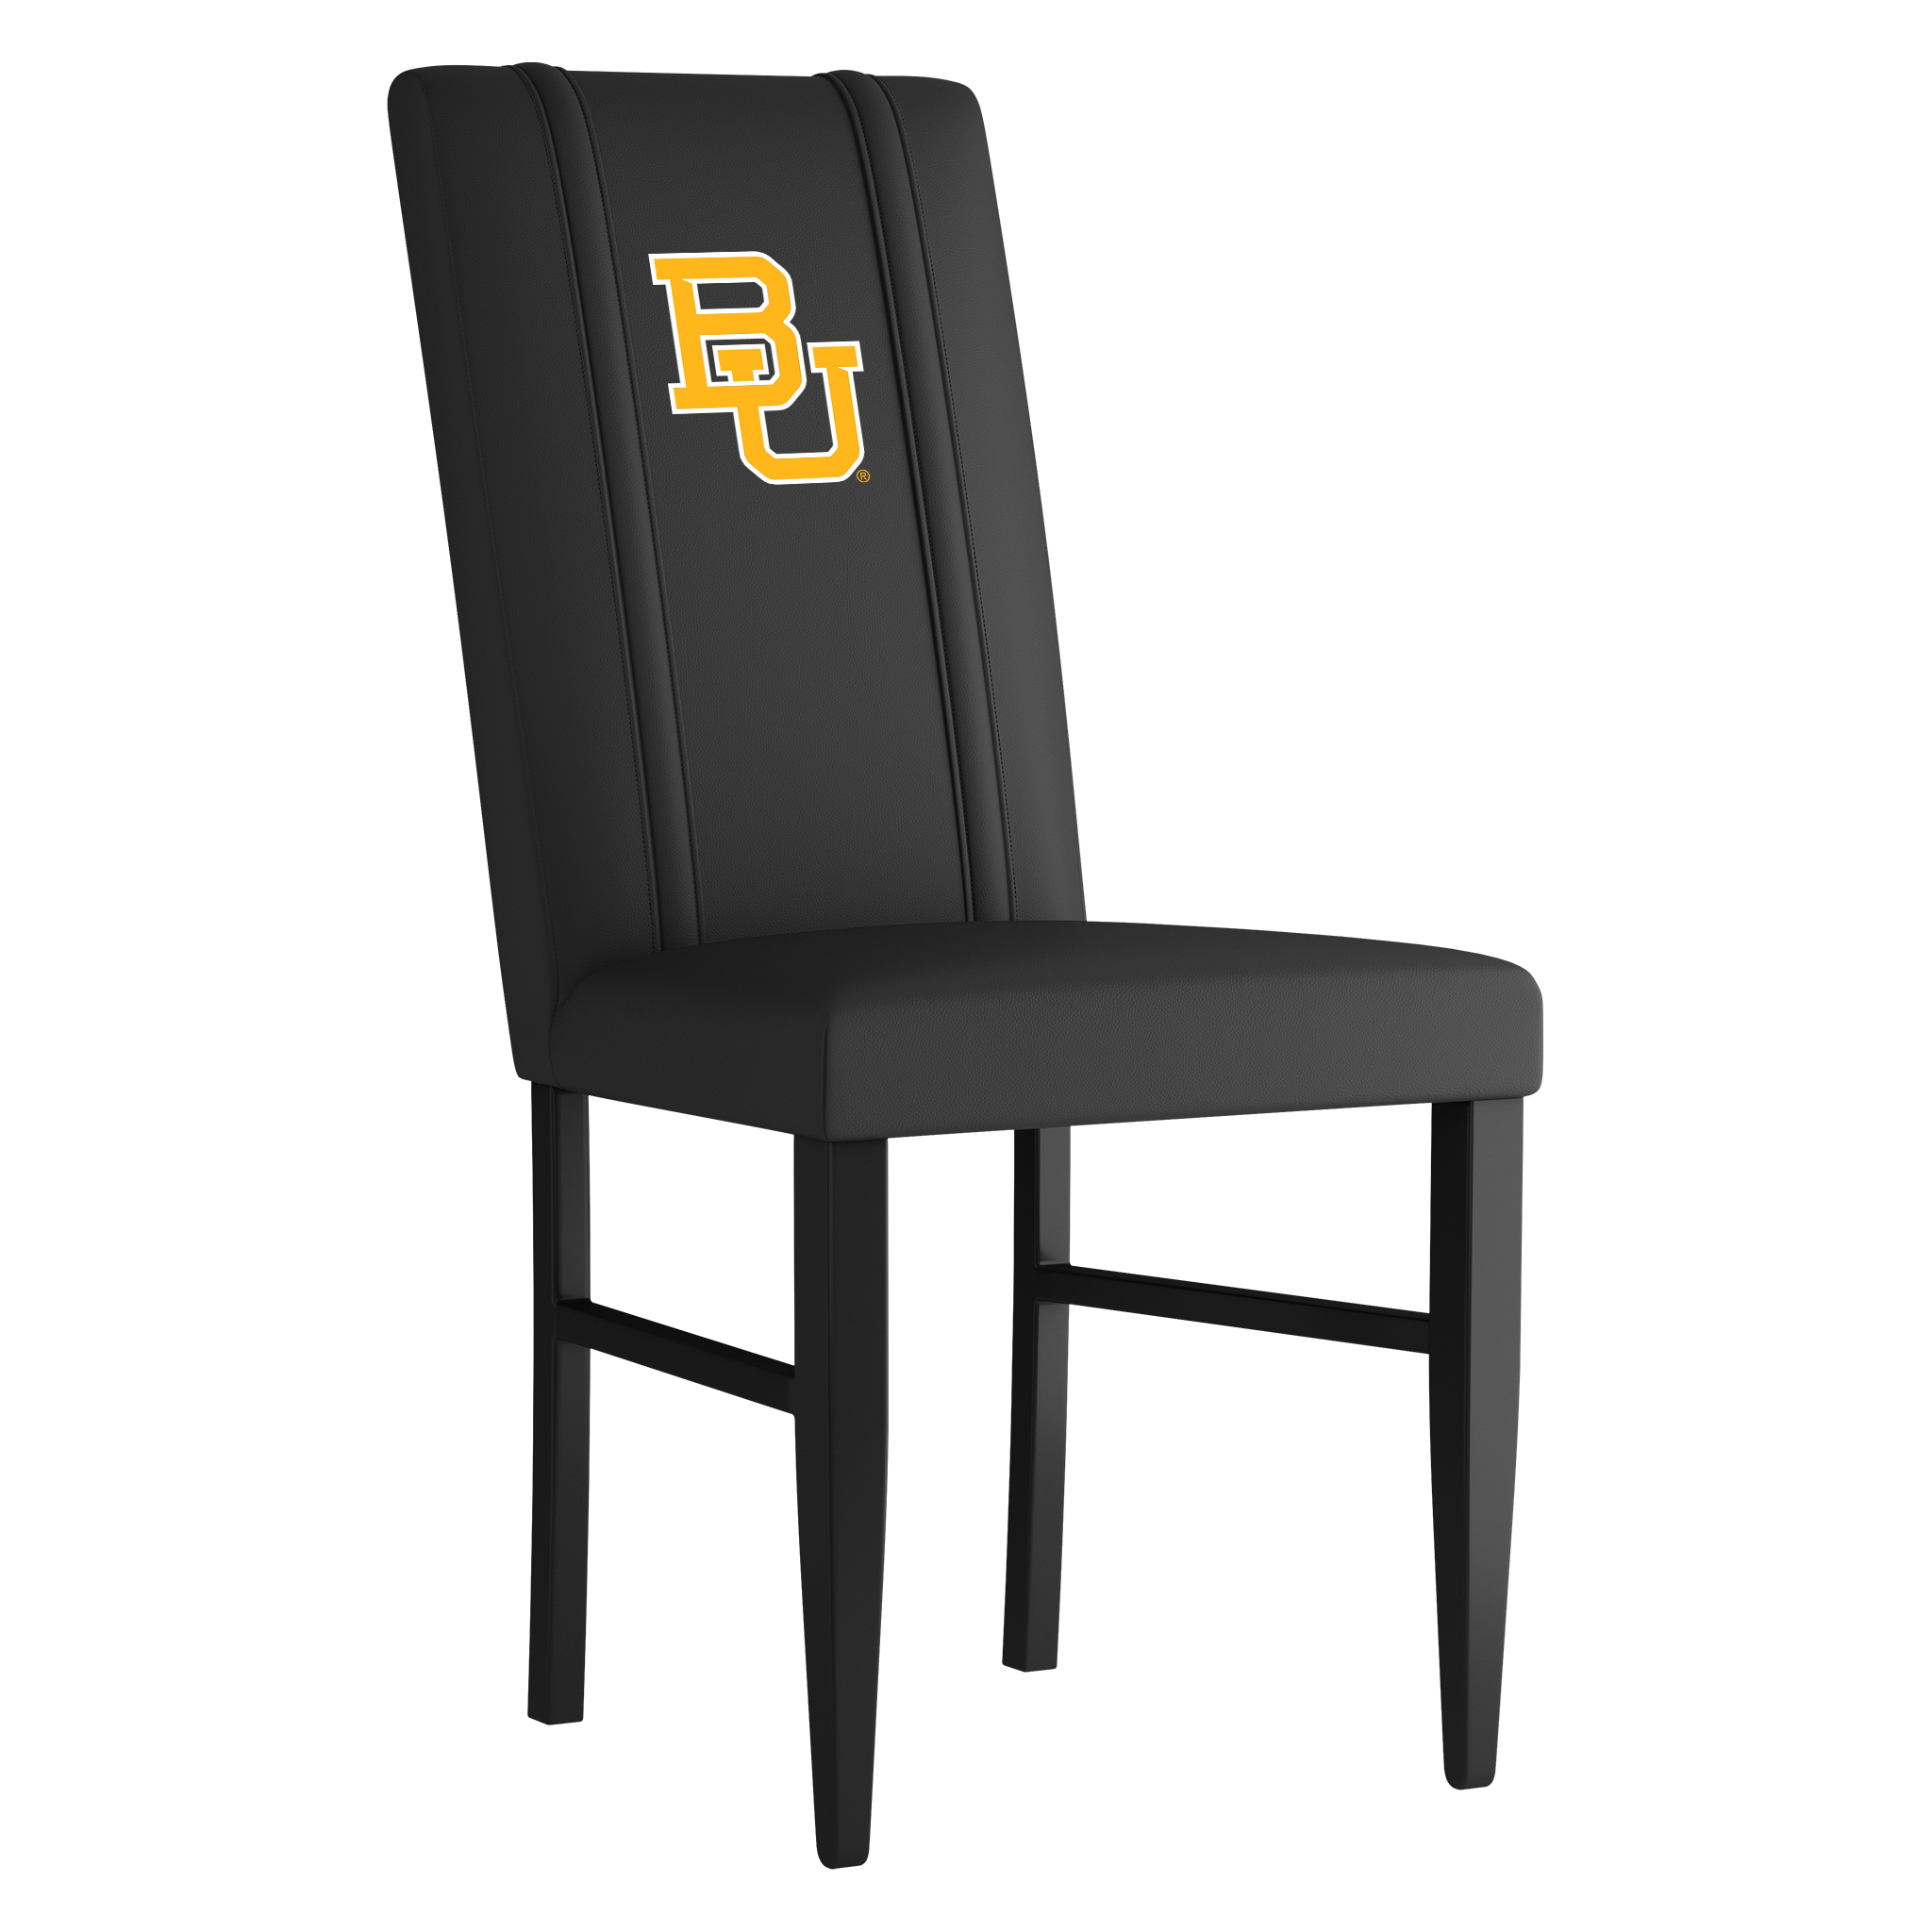 Baylor Bears Side Chair 2000 With Baylor Bears Logo